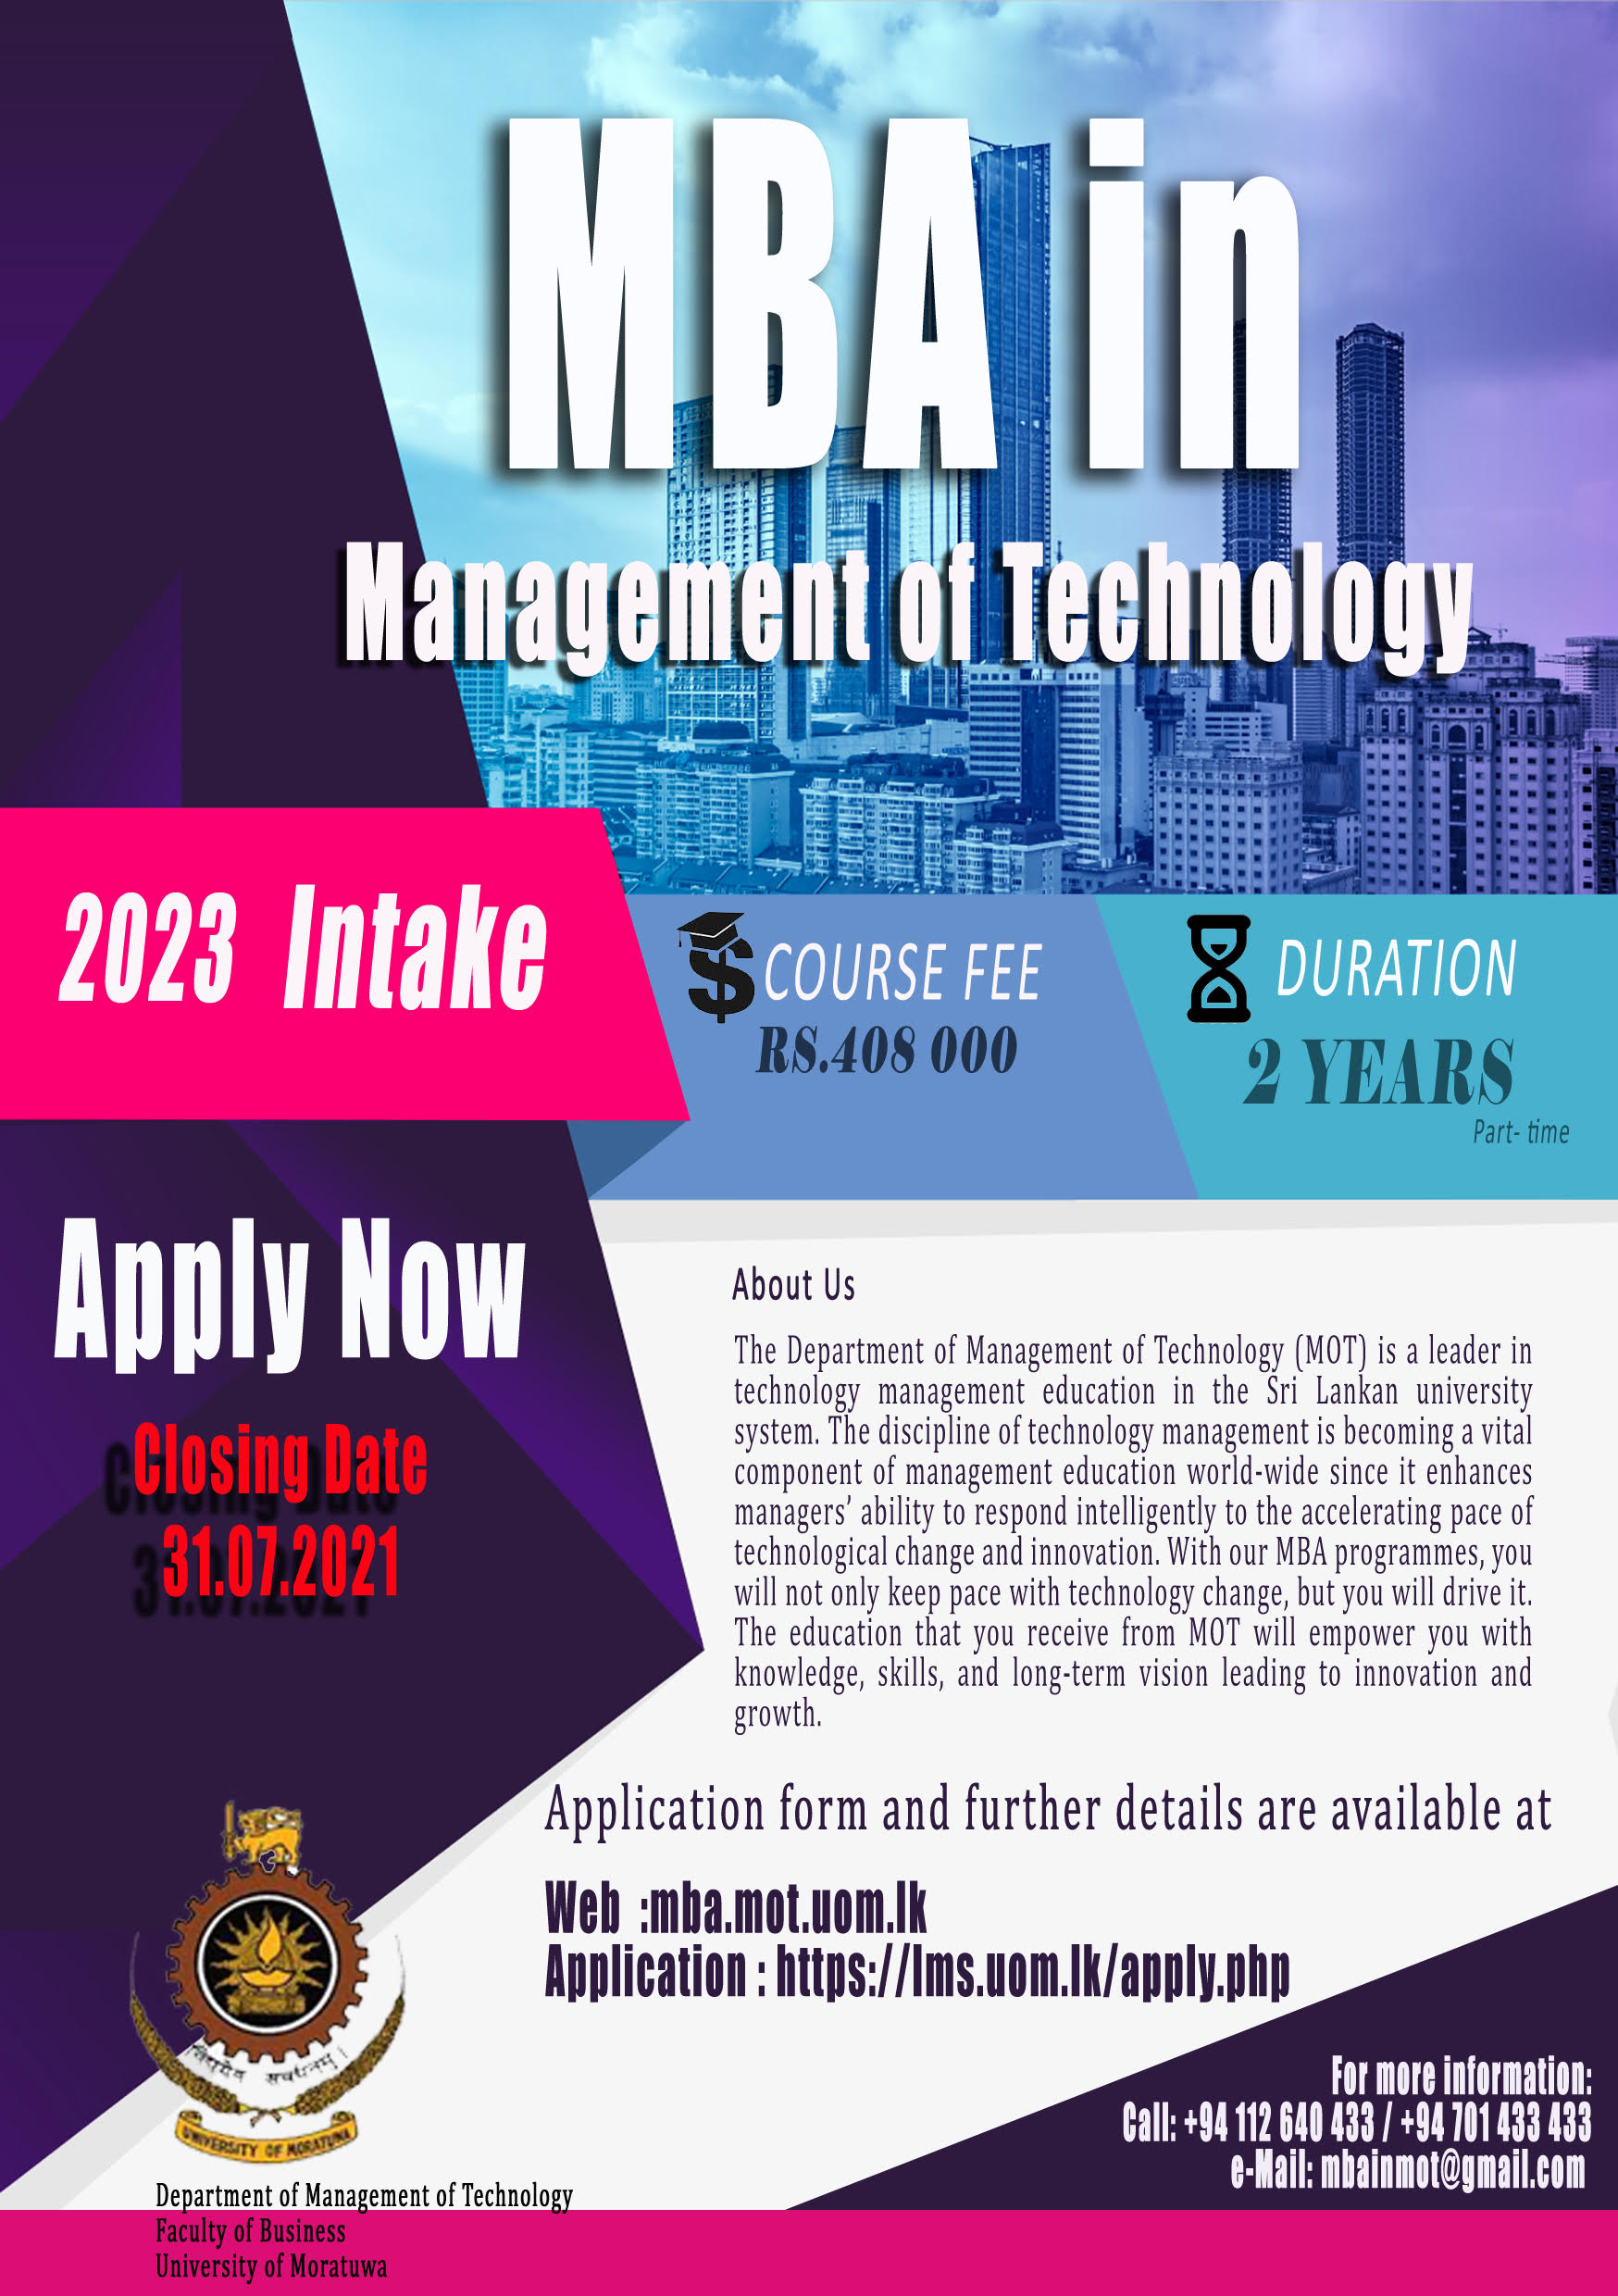 mba-in-management-of-technology-2023-mba-in-entrepreneurship-2023-university-of-moratuwa